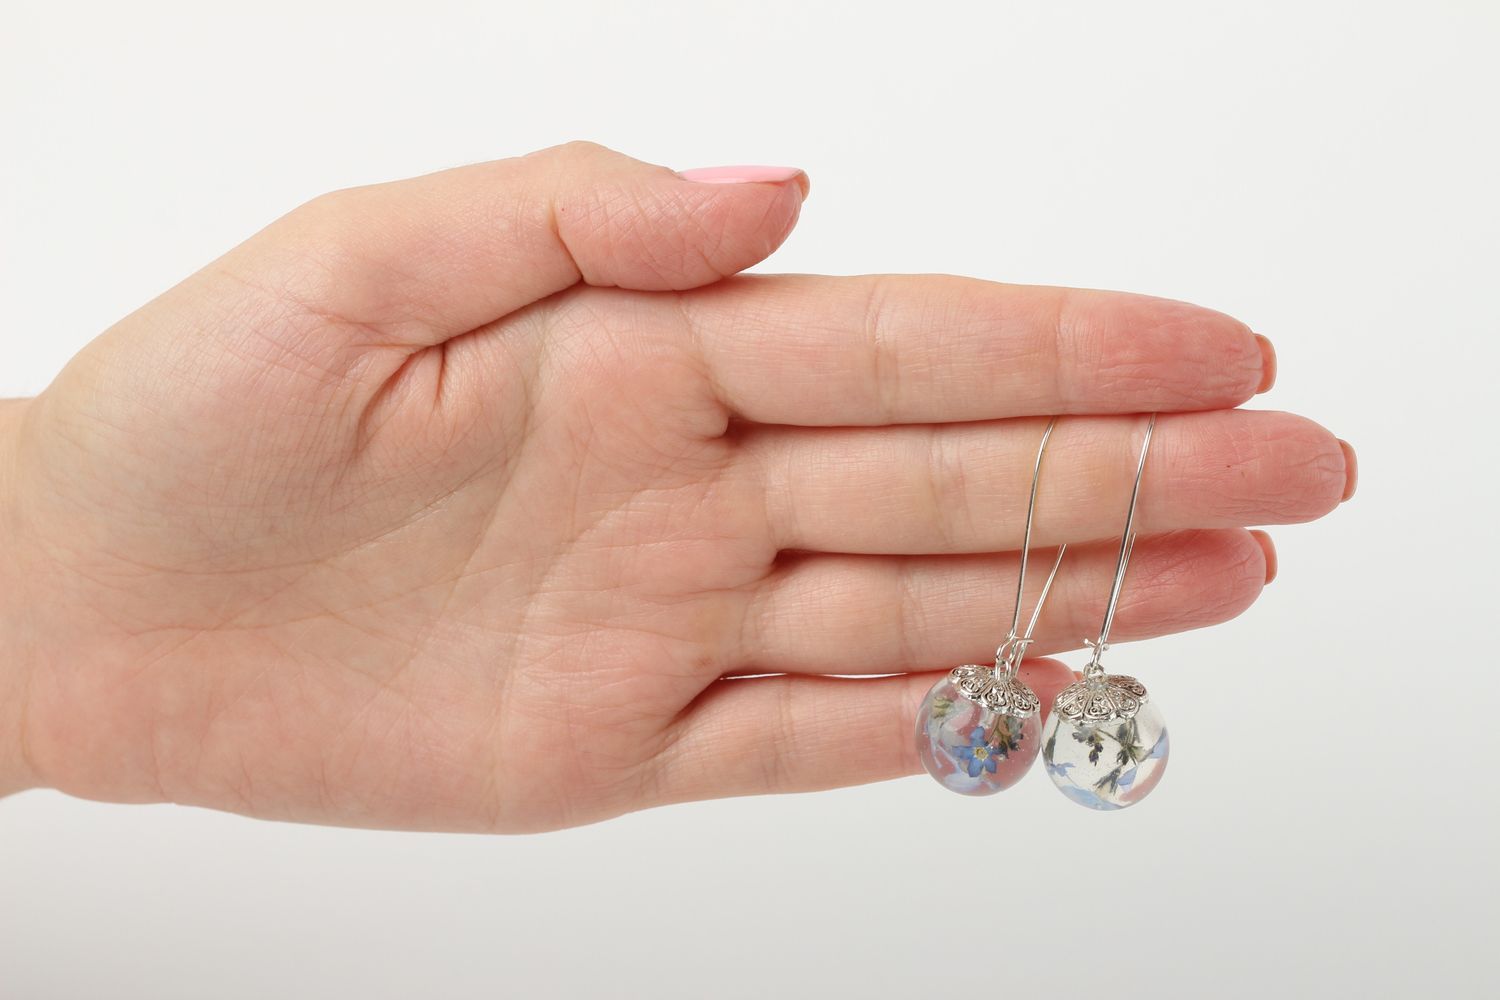 Botanic earrings handmade stylish earrings with charms earrings with flowers photo 5